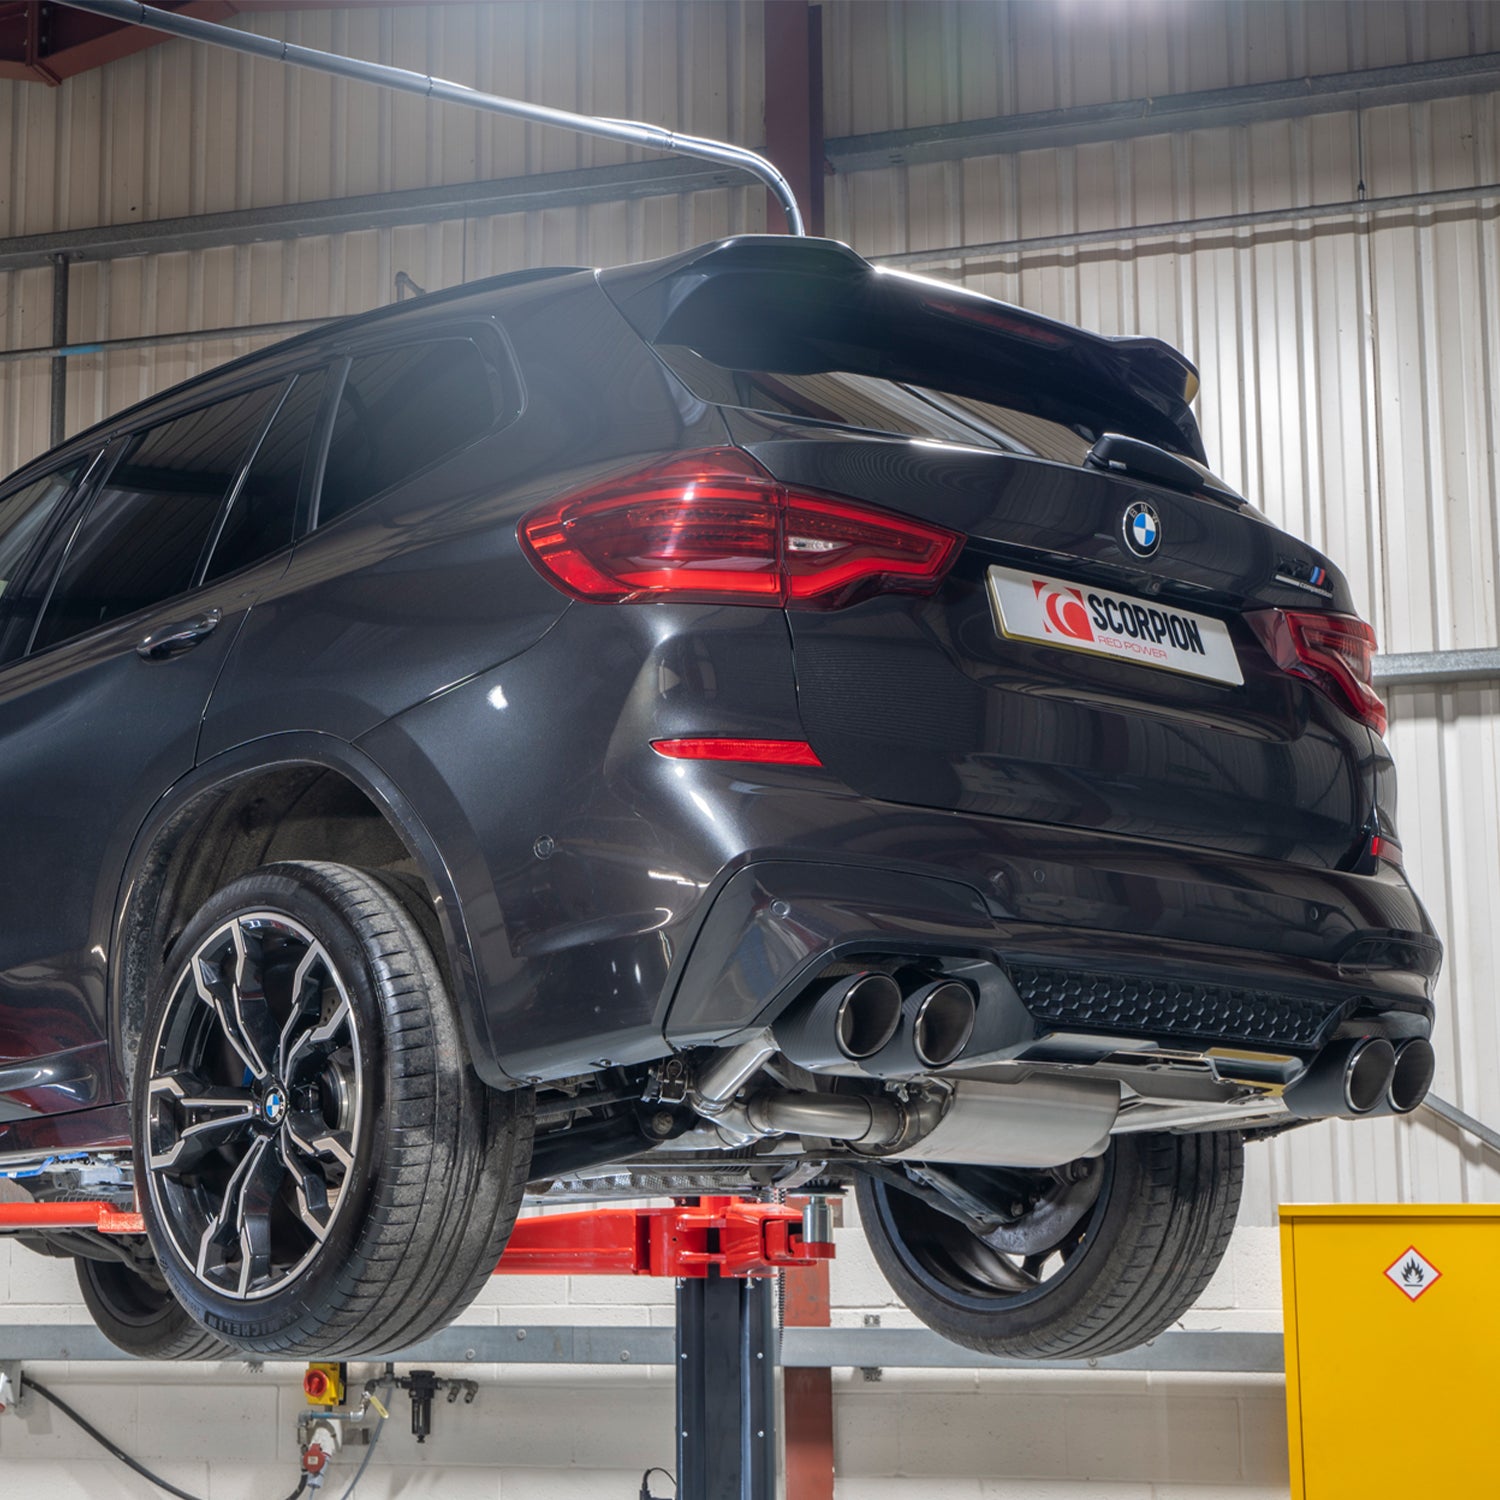 Scorpion BMW X3M OPF Back Exhaust System (F97)